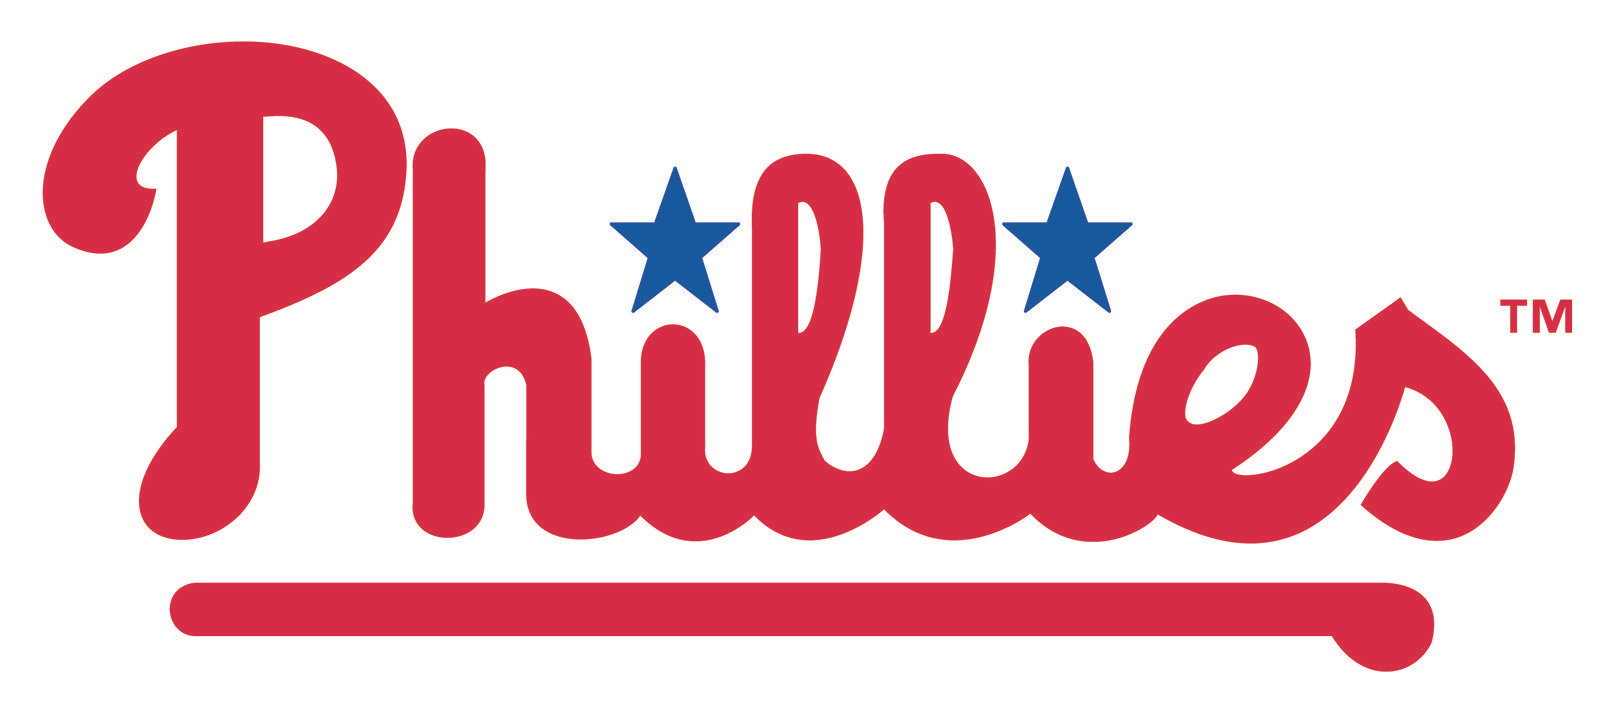 Different Phillies Logo - Philadelphia Phillies Logo, Phillies Symbol, Meaning, History